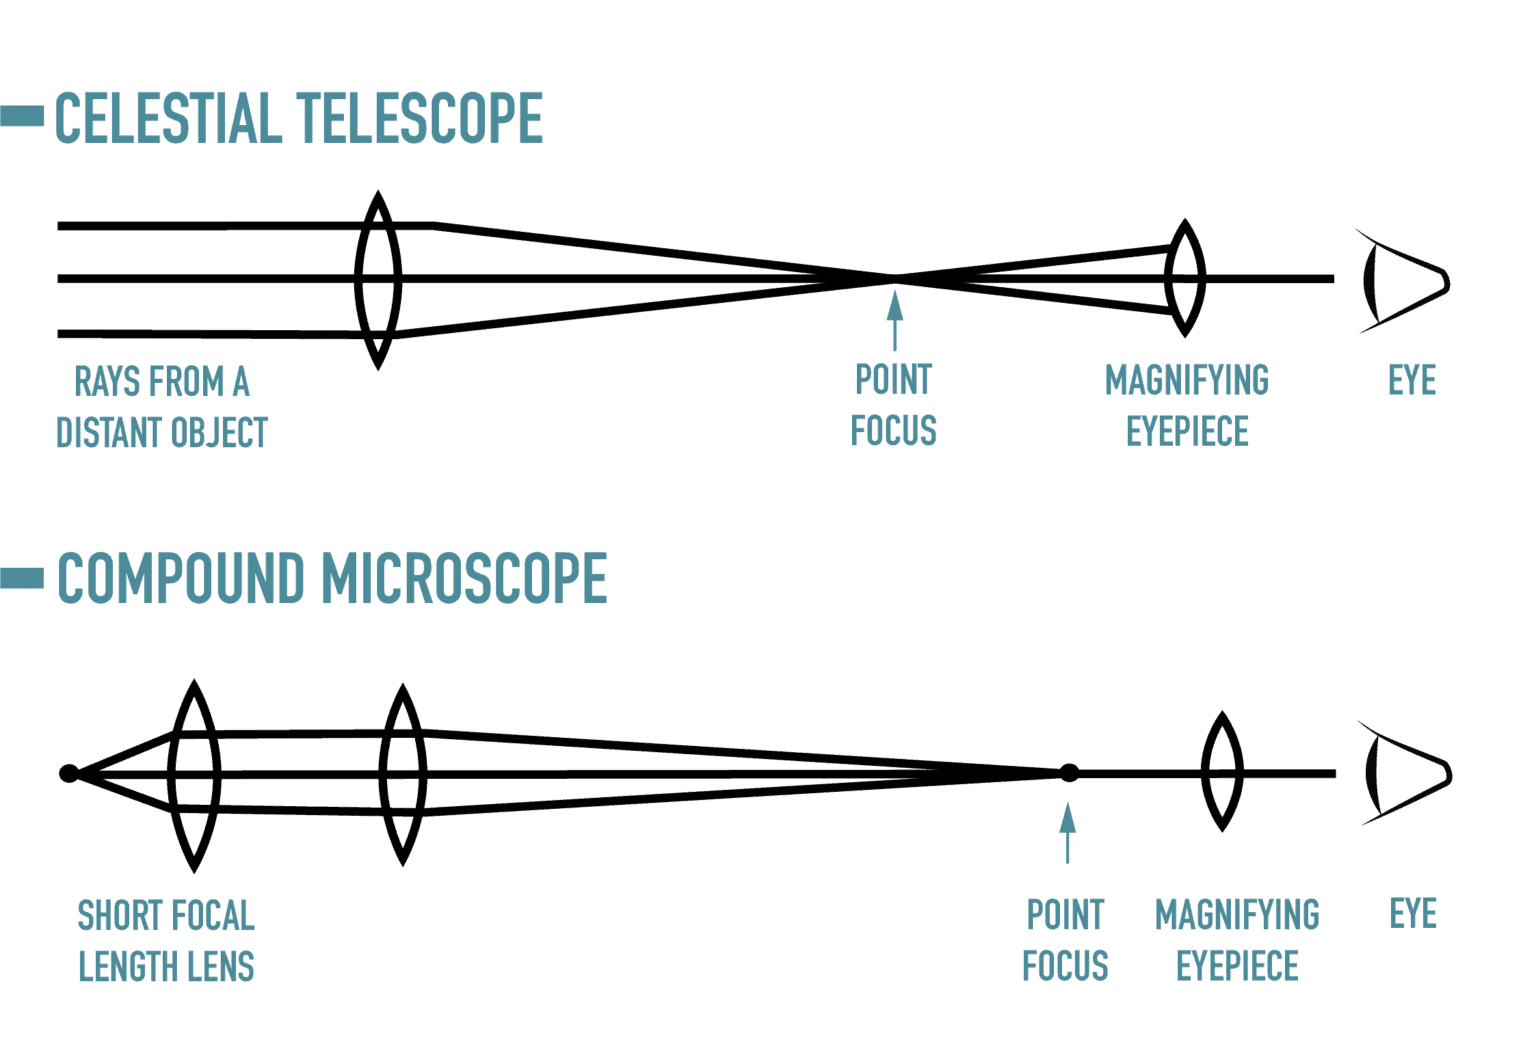 refractor telescope diagram